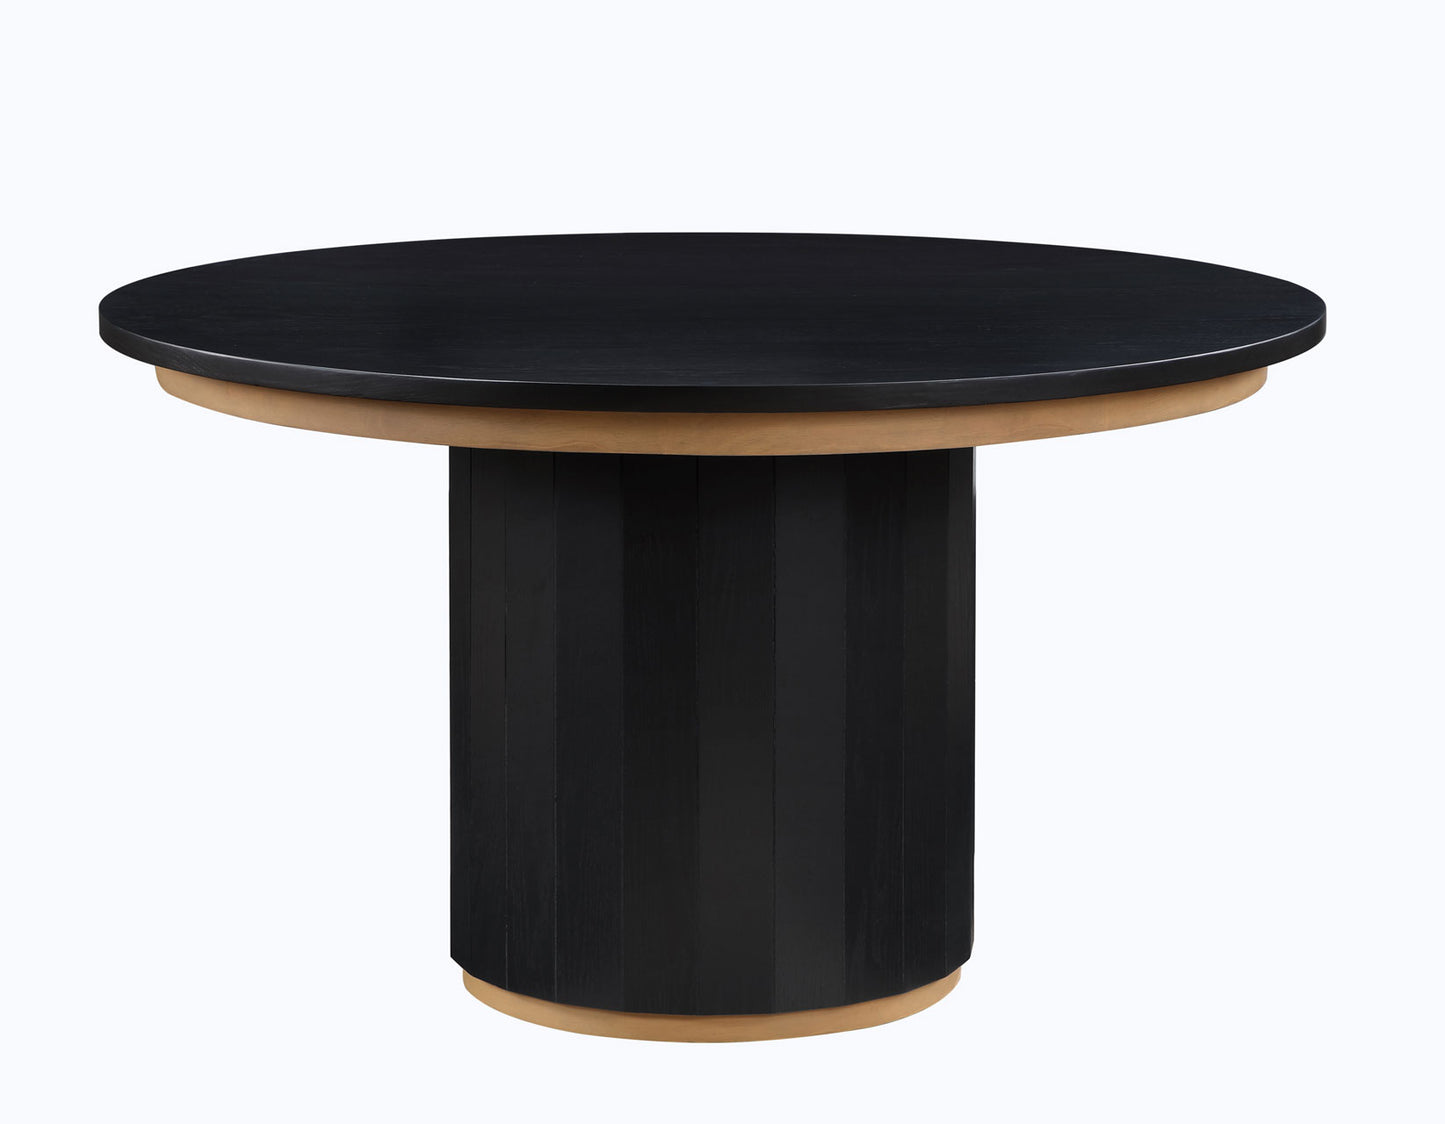 Magnolia 52-inch Round Table, Black